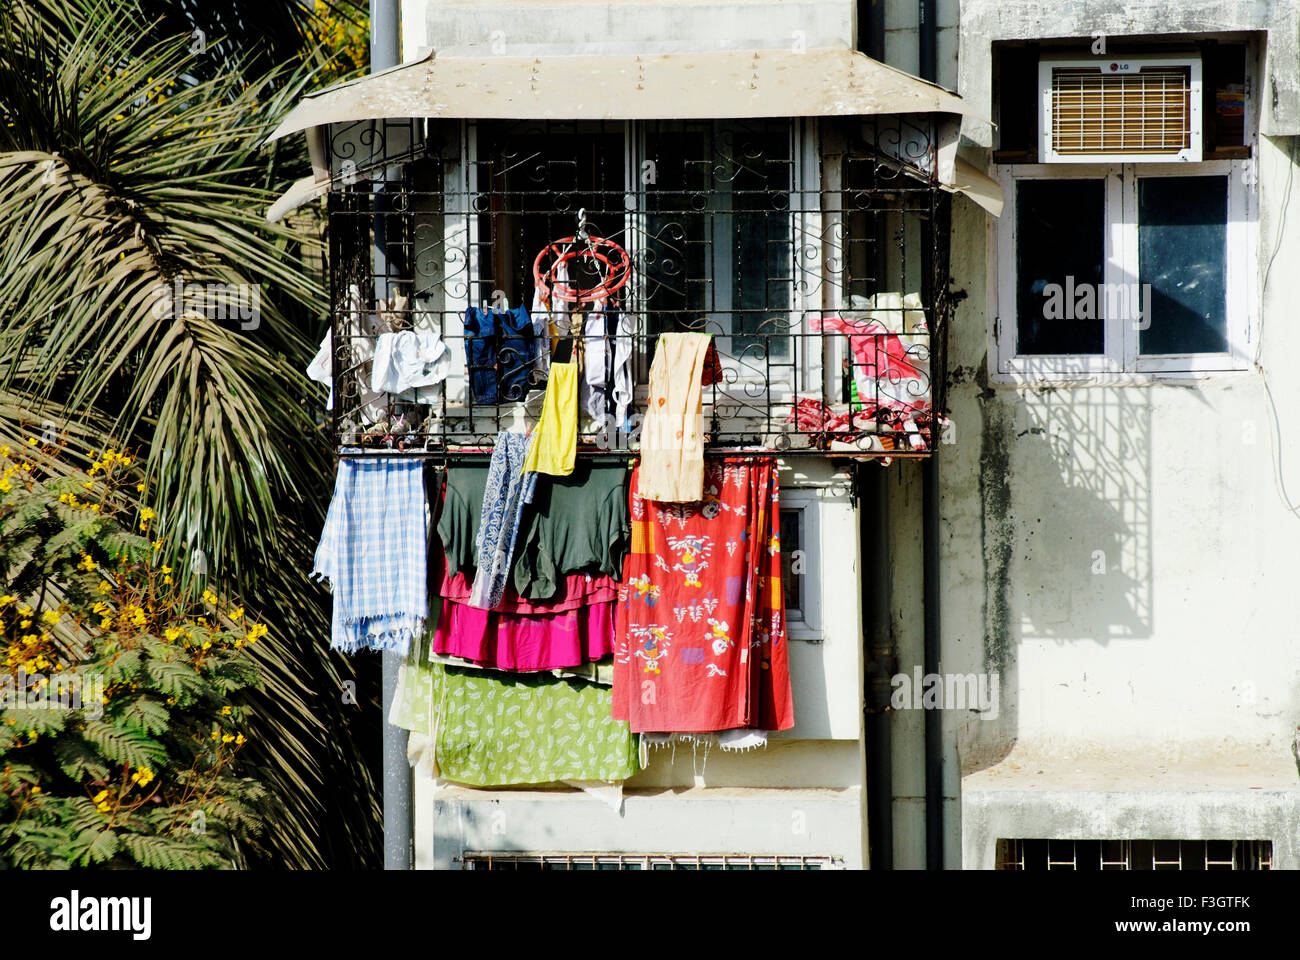 Kichad Clothing' Inspired by Mumbai Rains